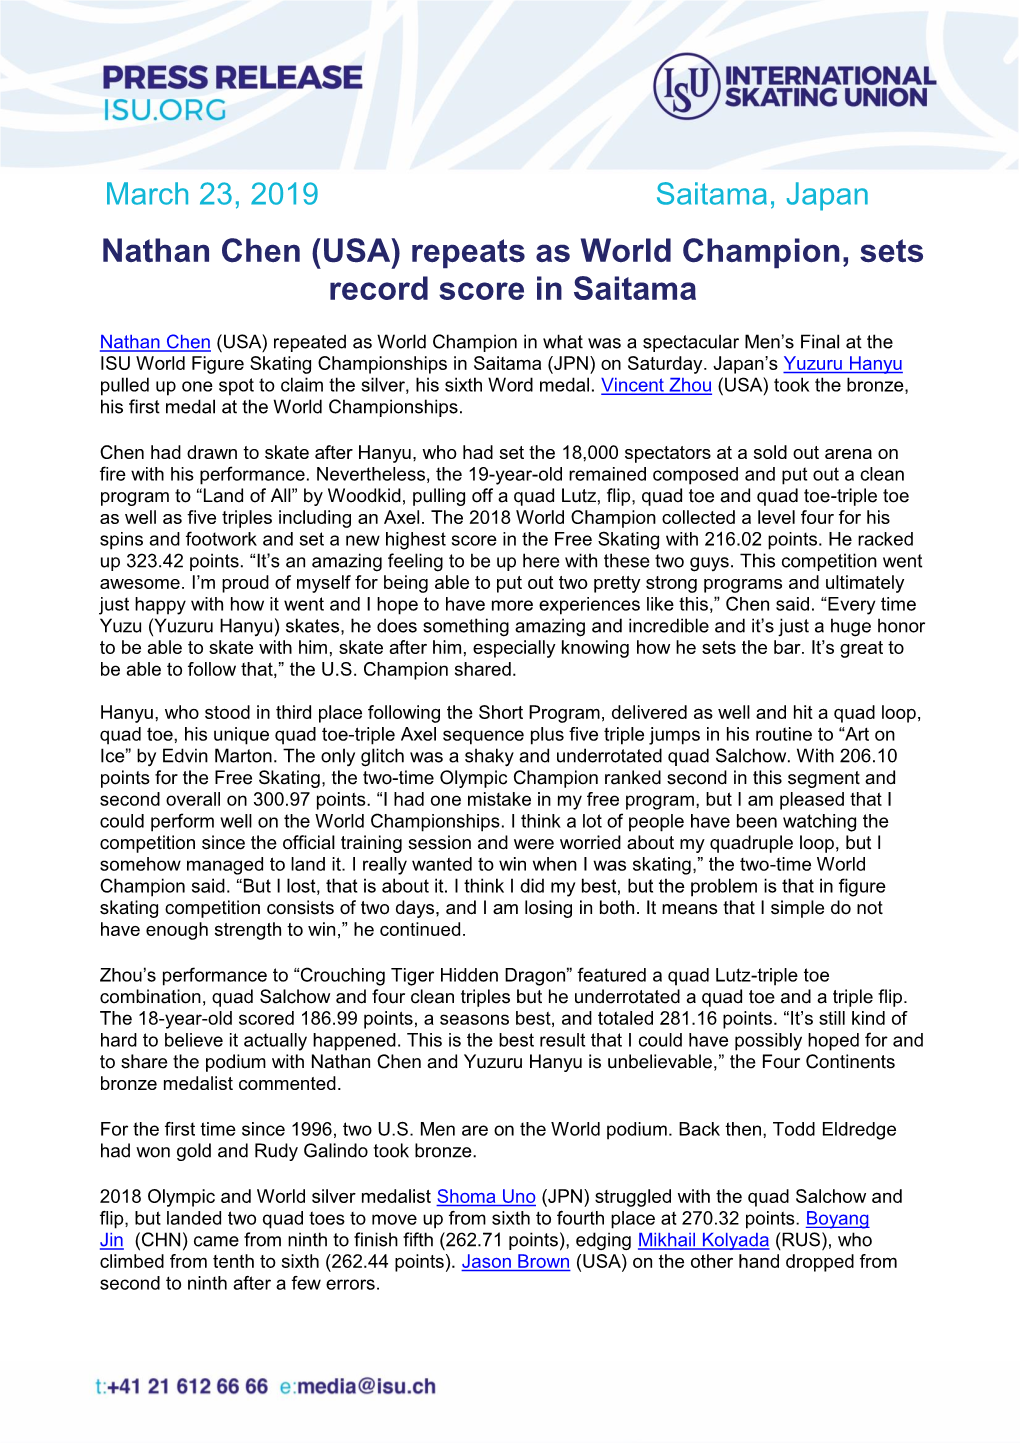 Nathan Chen (USA) Repeats As World Champion, Sets Record Score in Saitama